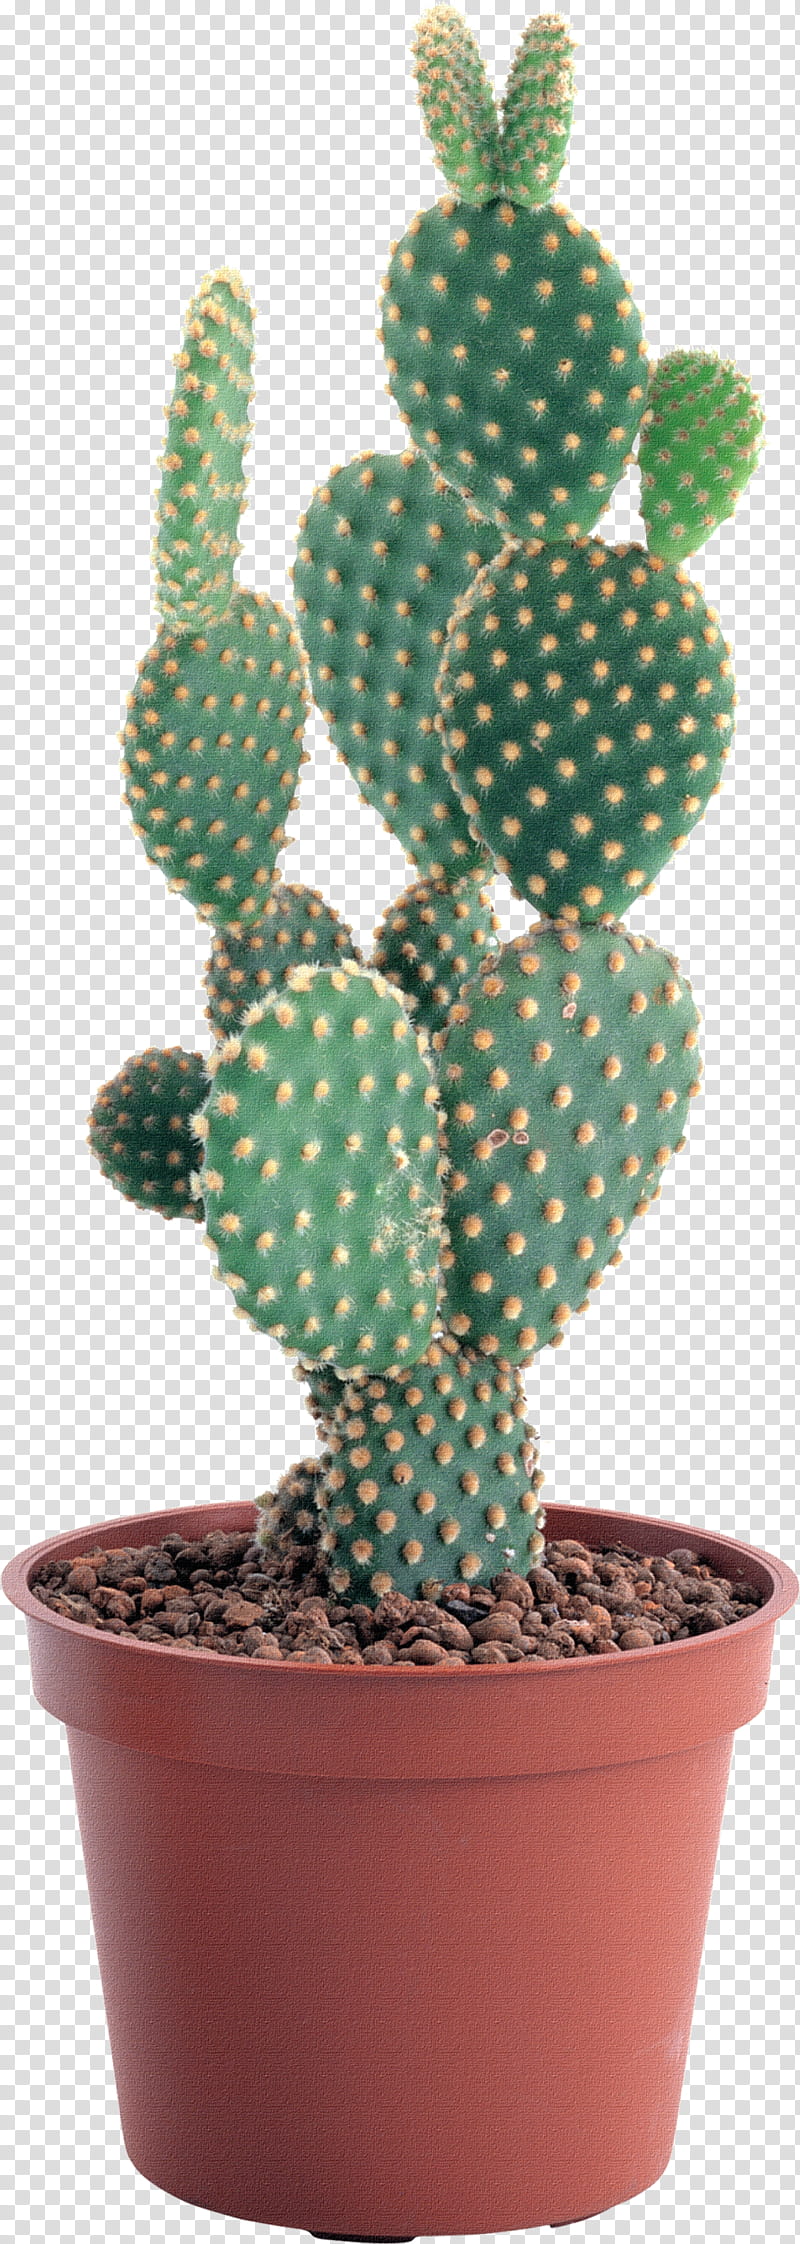 Cactus, Saguaro National Park, Succulents And Cactus, Barbary Fig, Succulent Plant, Strawberry Hedgehog Cactus, Plants, Rhipsalis Baccifera transparent background PNG clipart